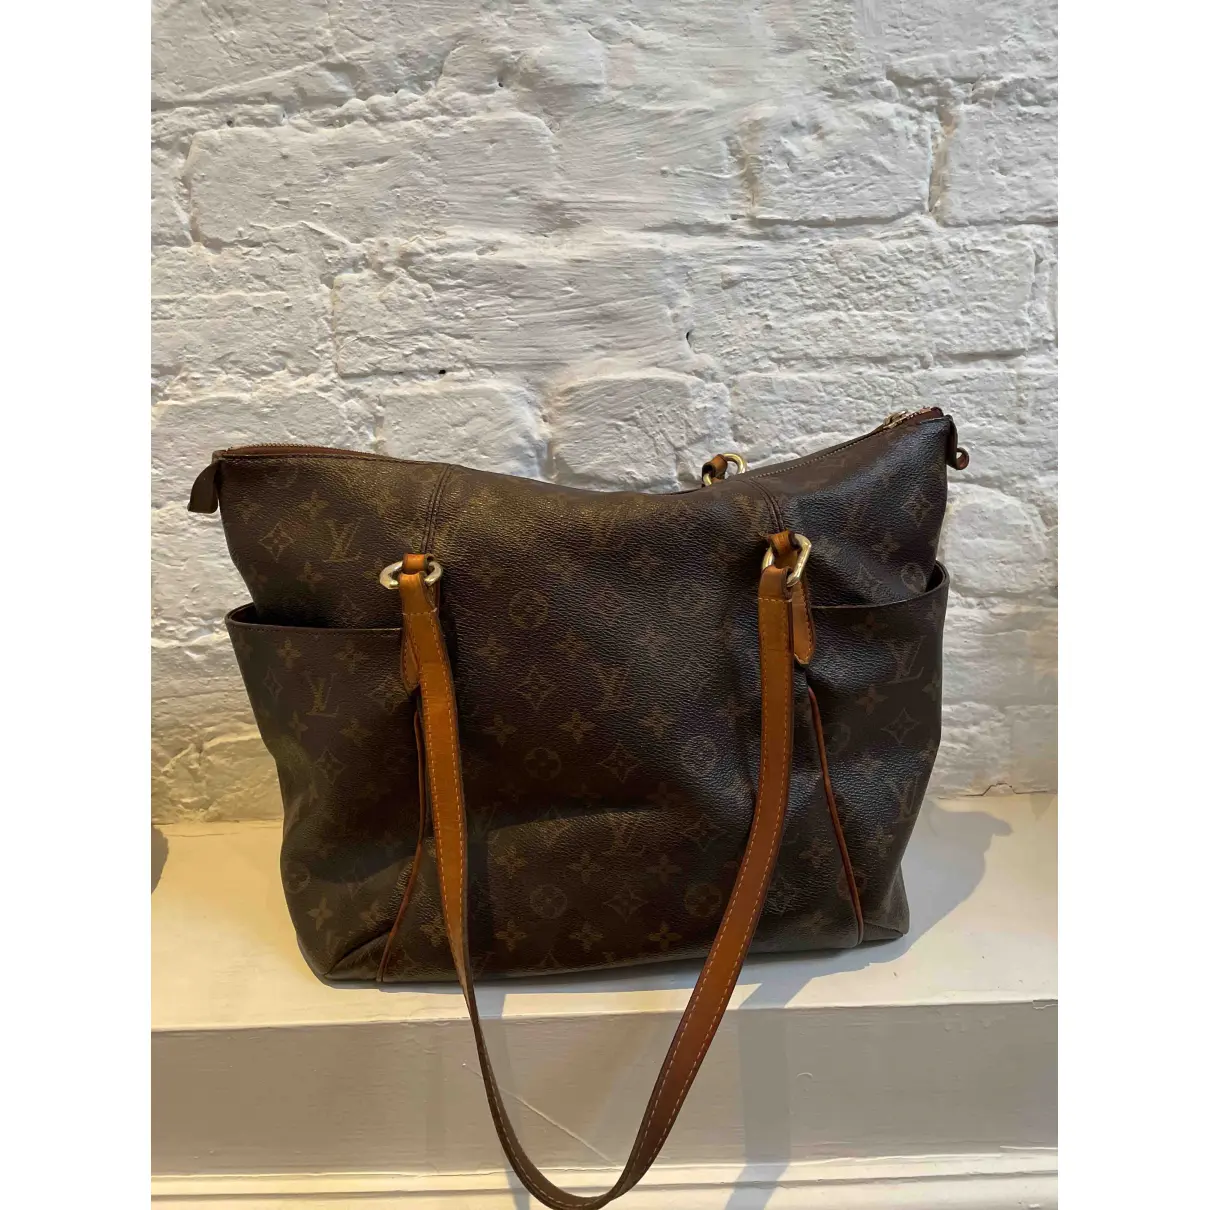 Buy Louis Vuitton Totally leather handbag online